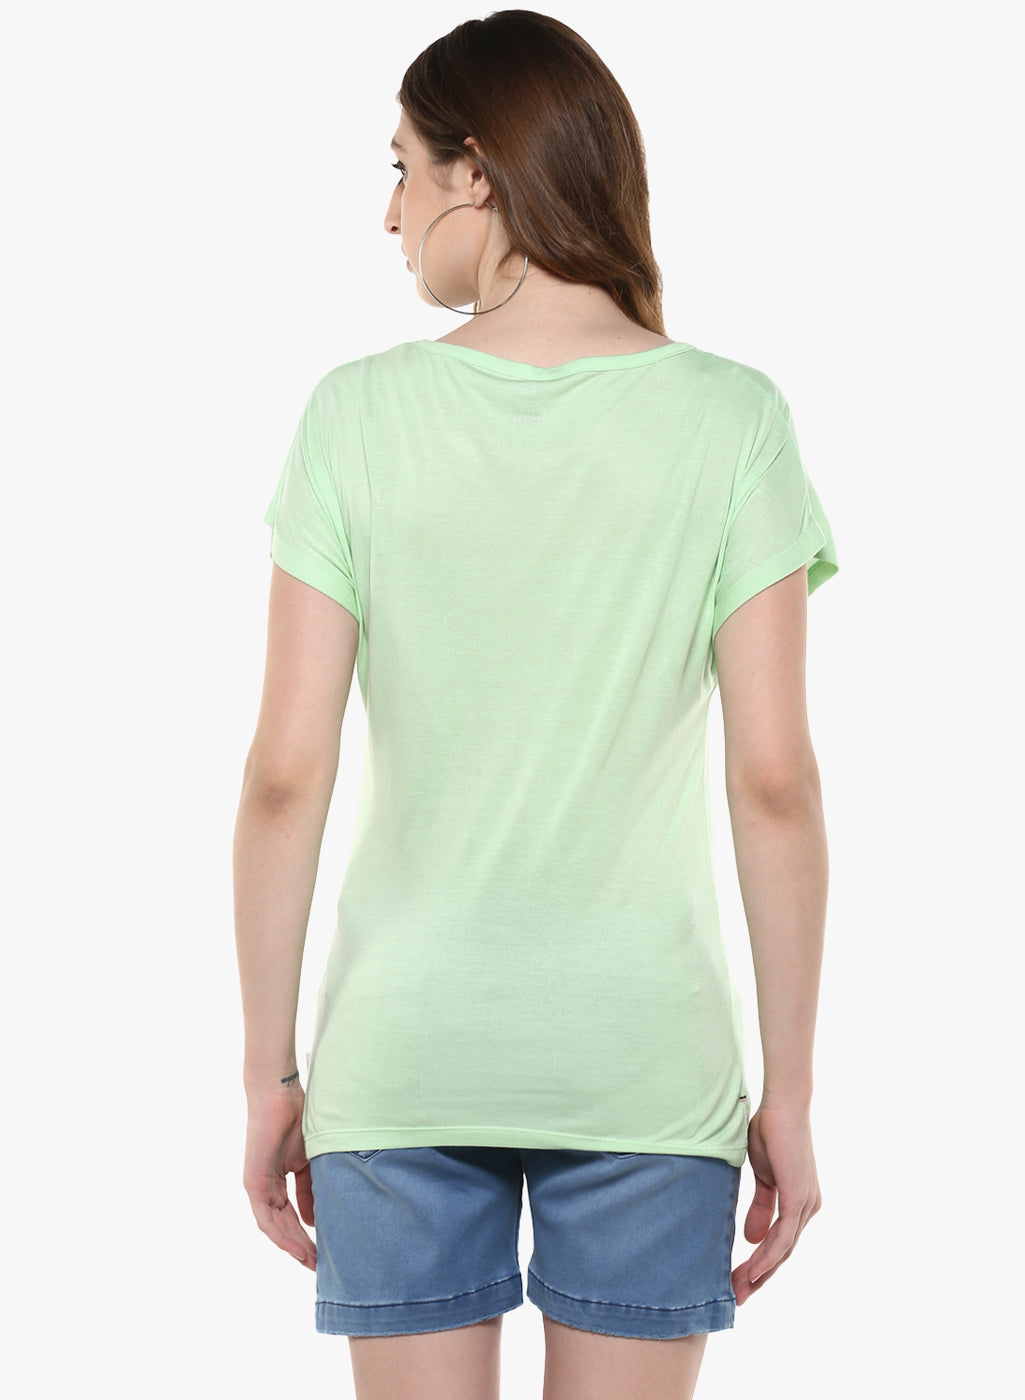 Green Printed Round Neck T-Shirt-Women T-Shirts-Crimsoune Club